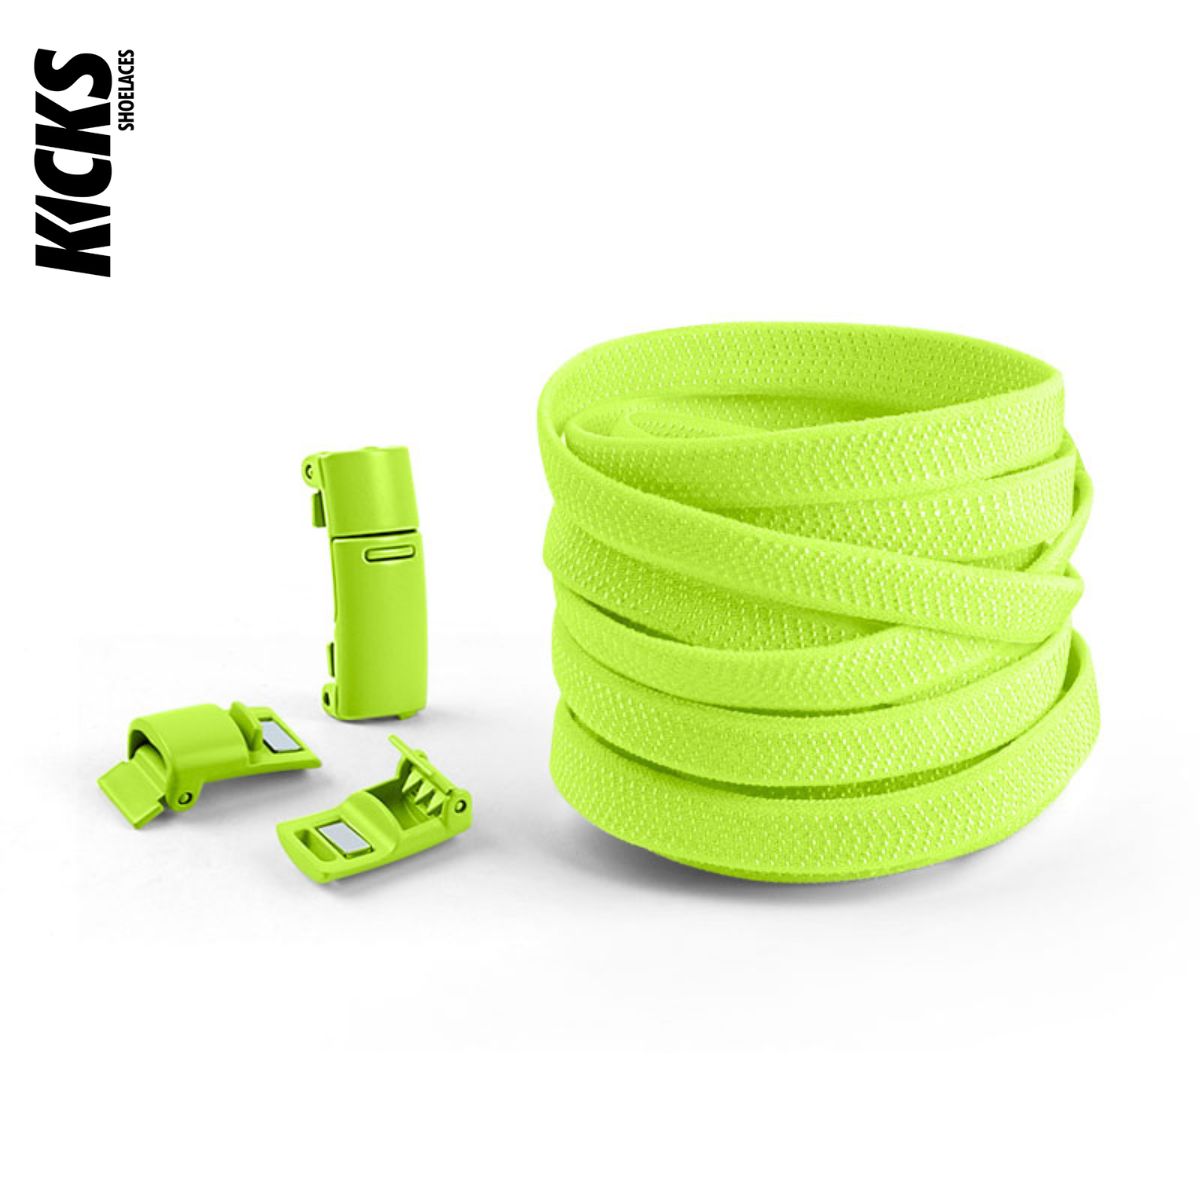 No-Tie Shoelaces with Magnetic Locks - Kicks Shoelaces